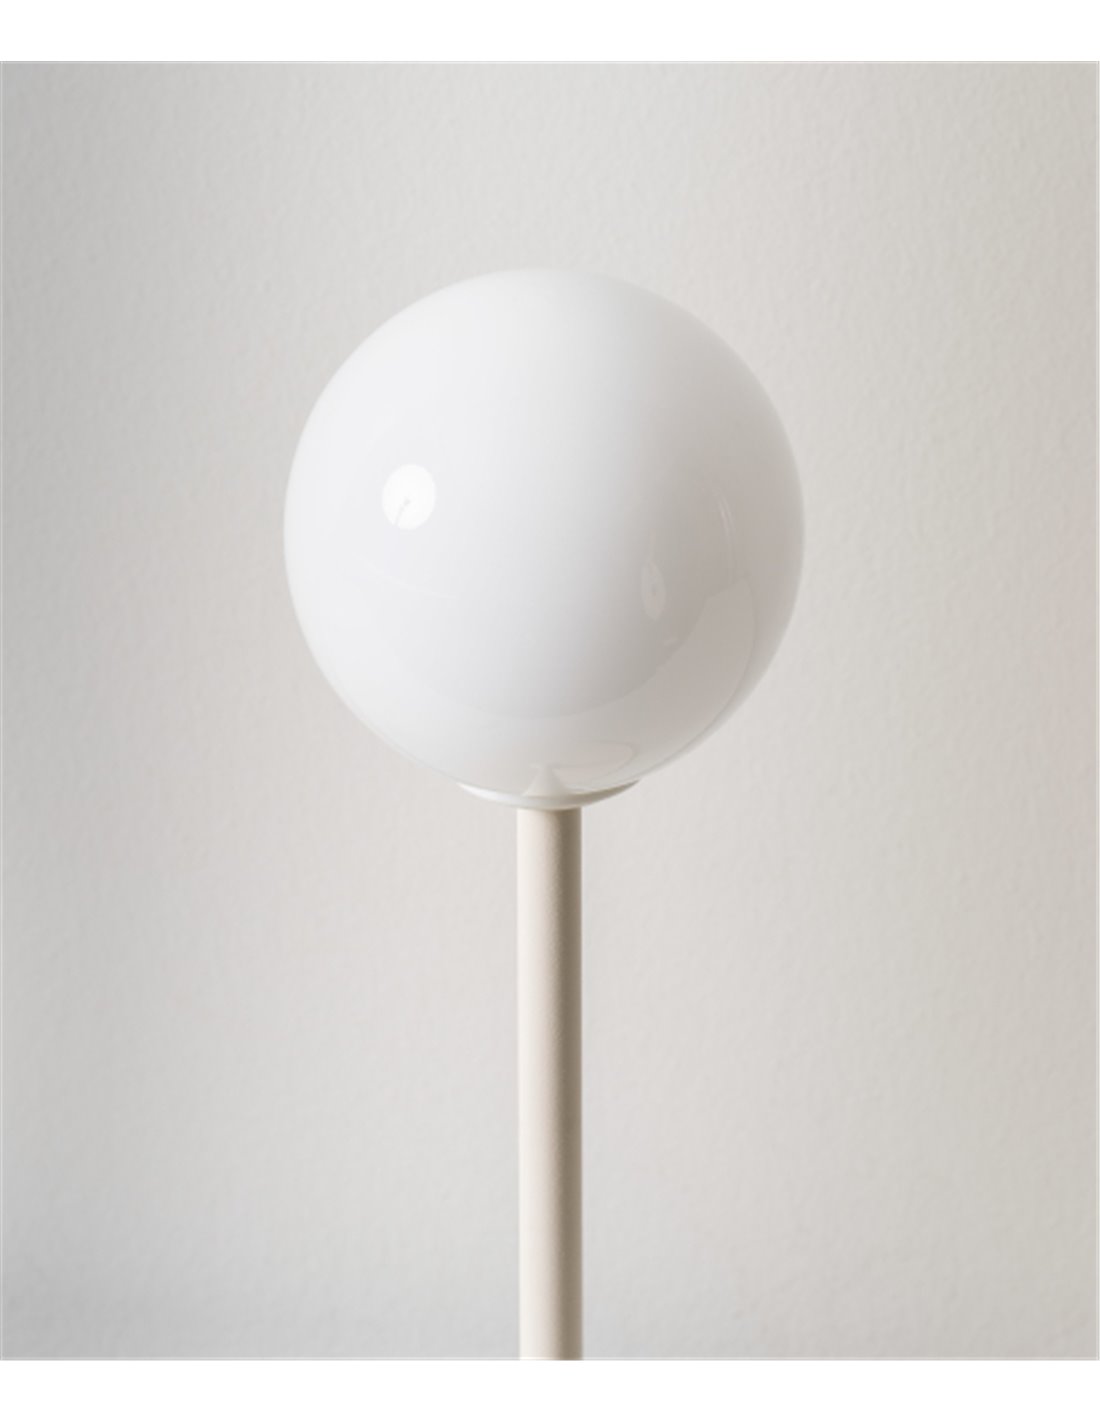 lamp, - - 30-45 cm light Grey-Copper-Mink, Symphony Milan Modern pendant Ø pendant